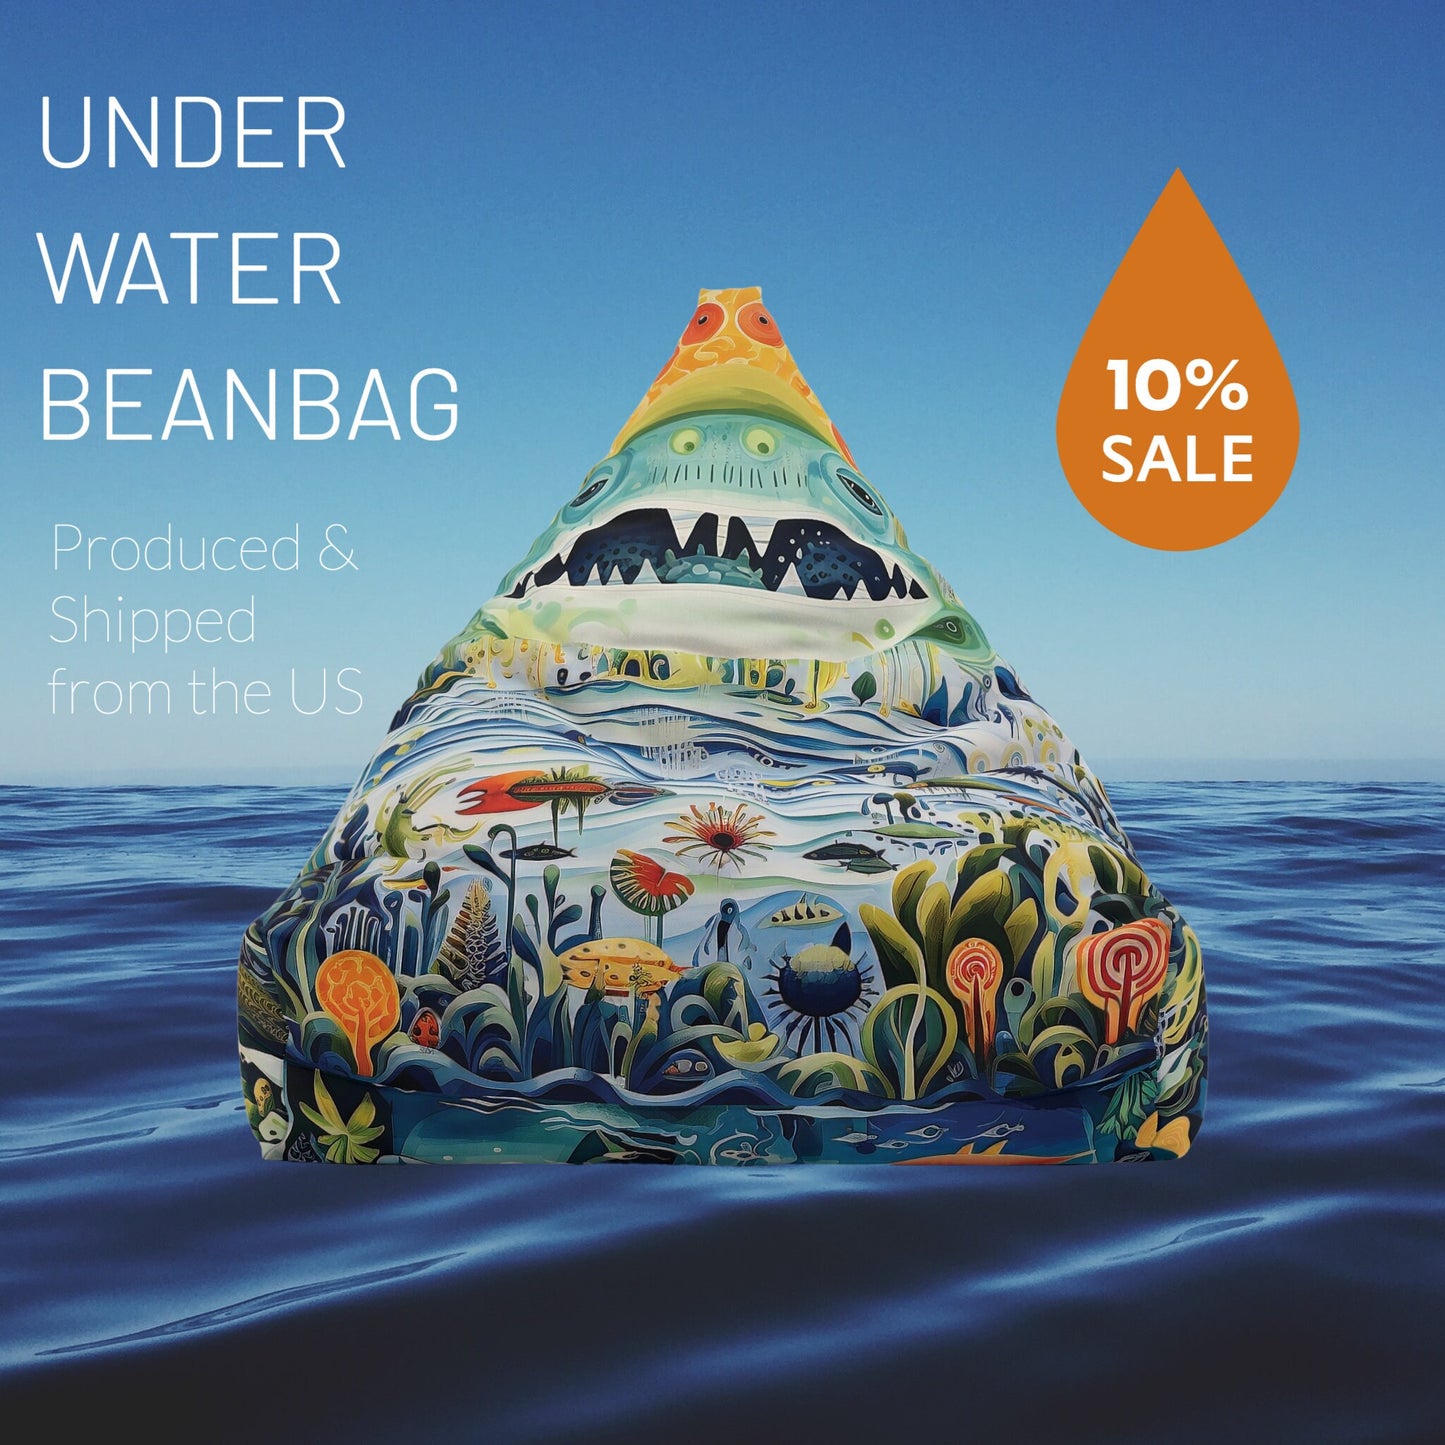 Under Water Bean Bag <3